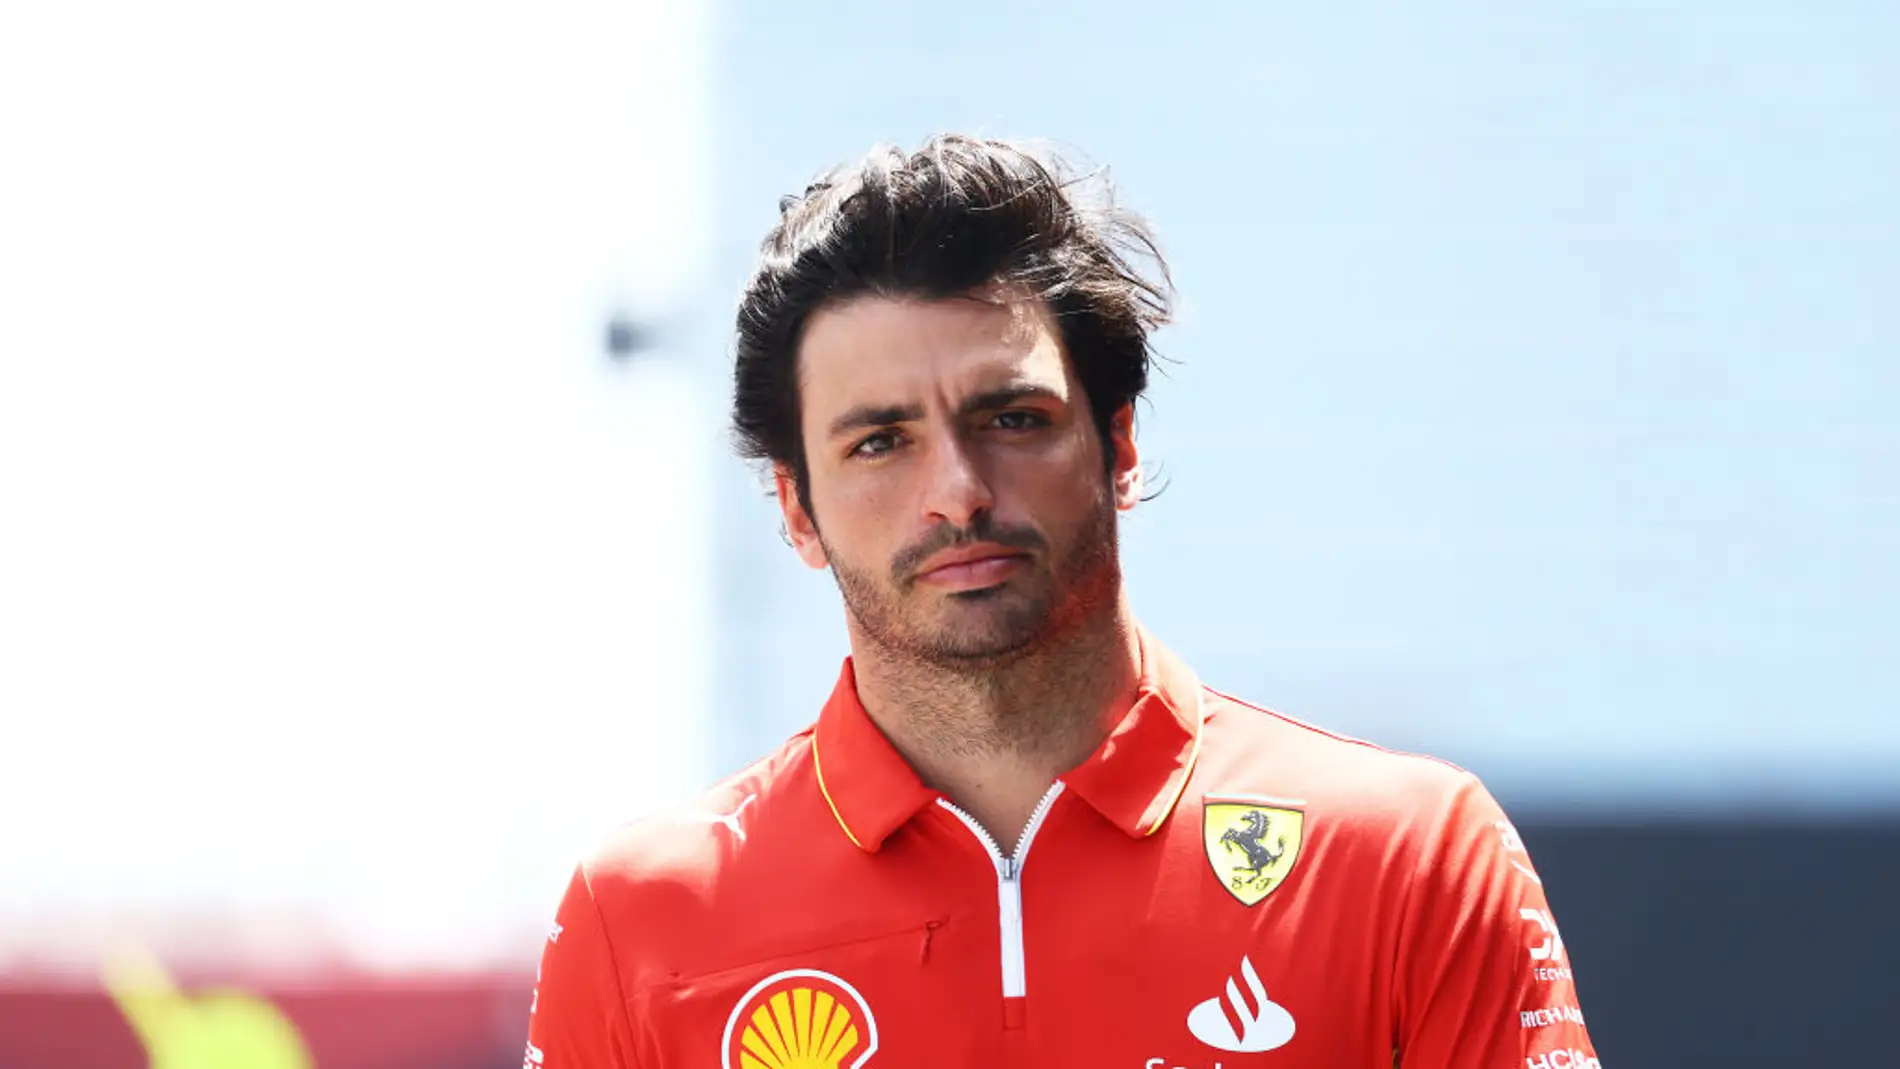 El piloto español de Ferrari, Carlos Sainz